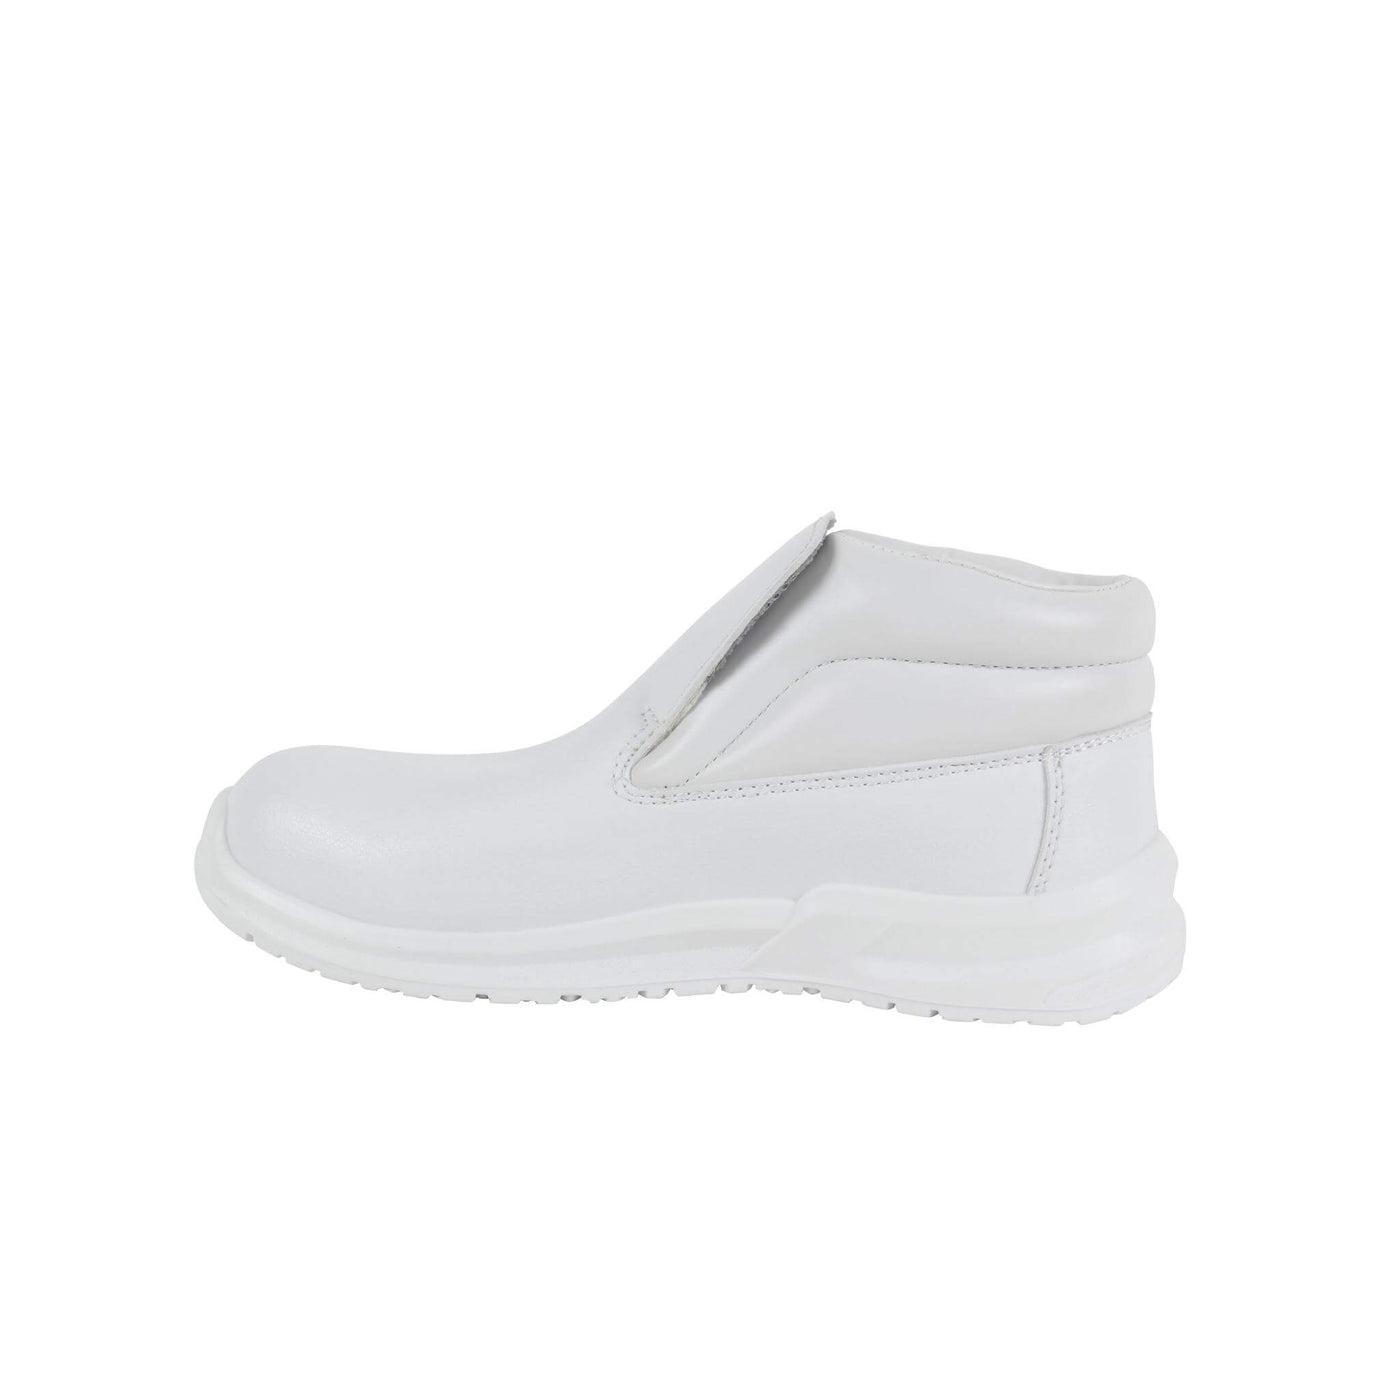 Blackrock Hygiene Slip-On Safety Boots White 2#colour_white